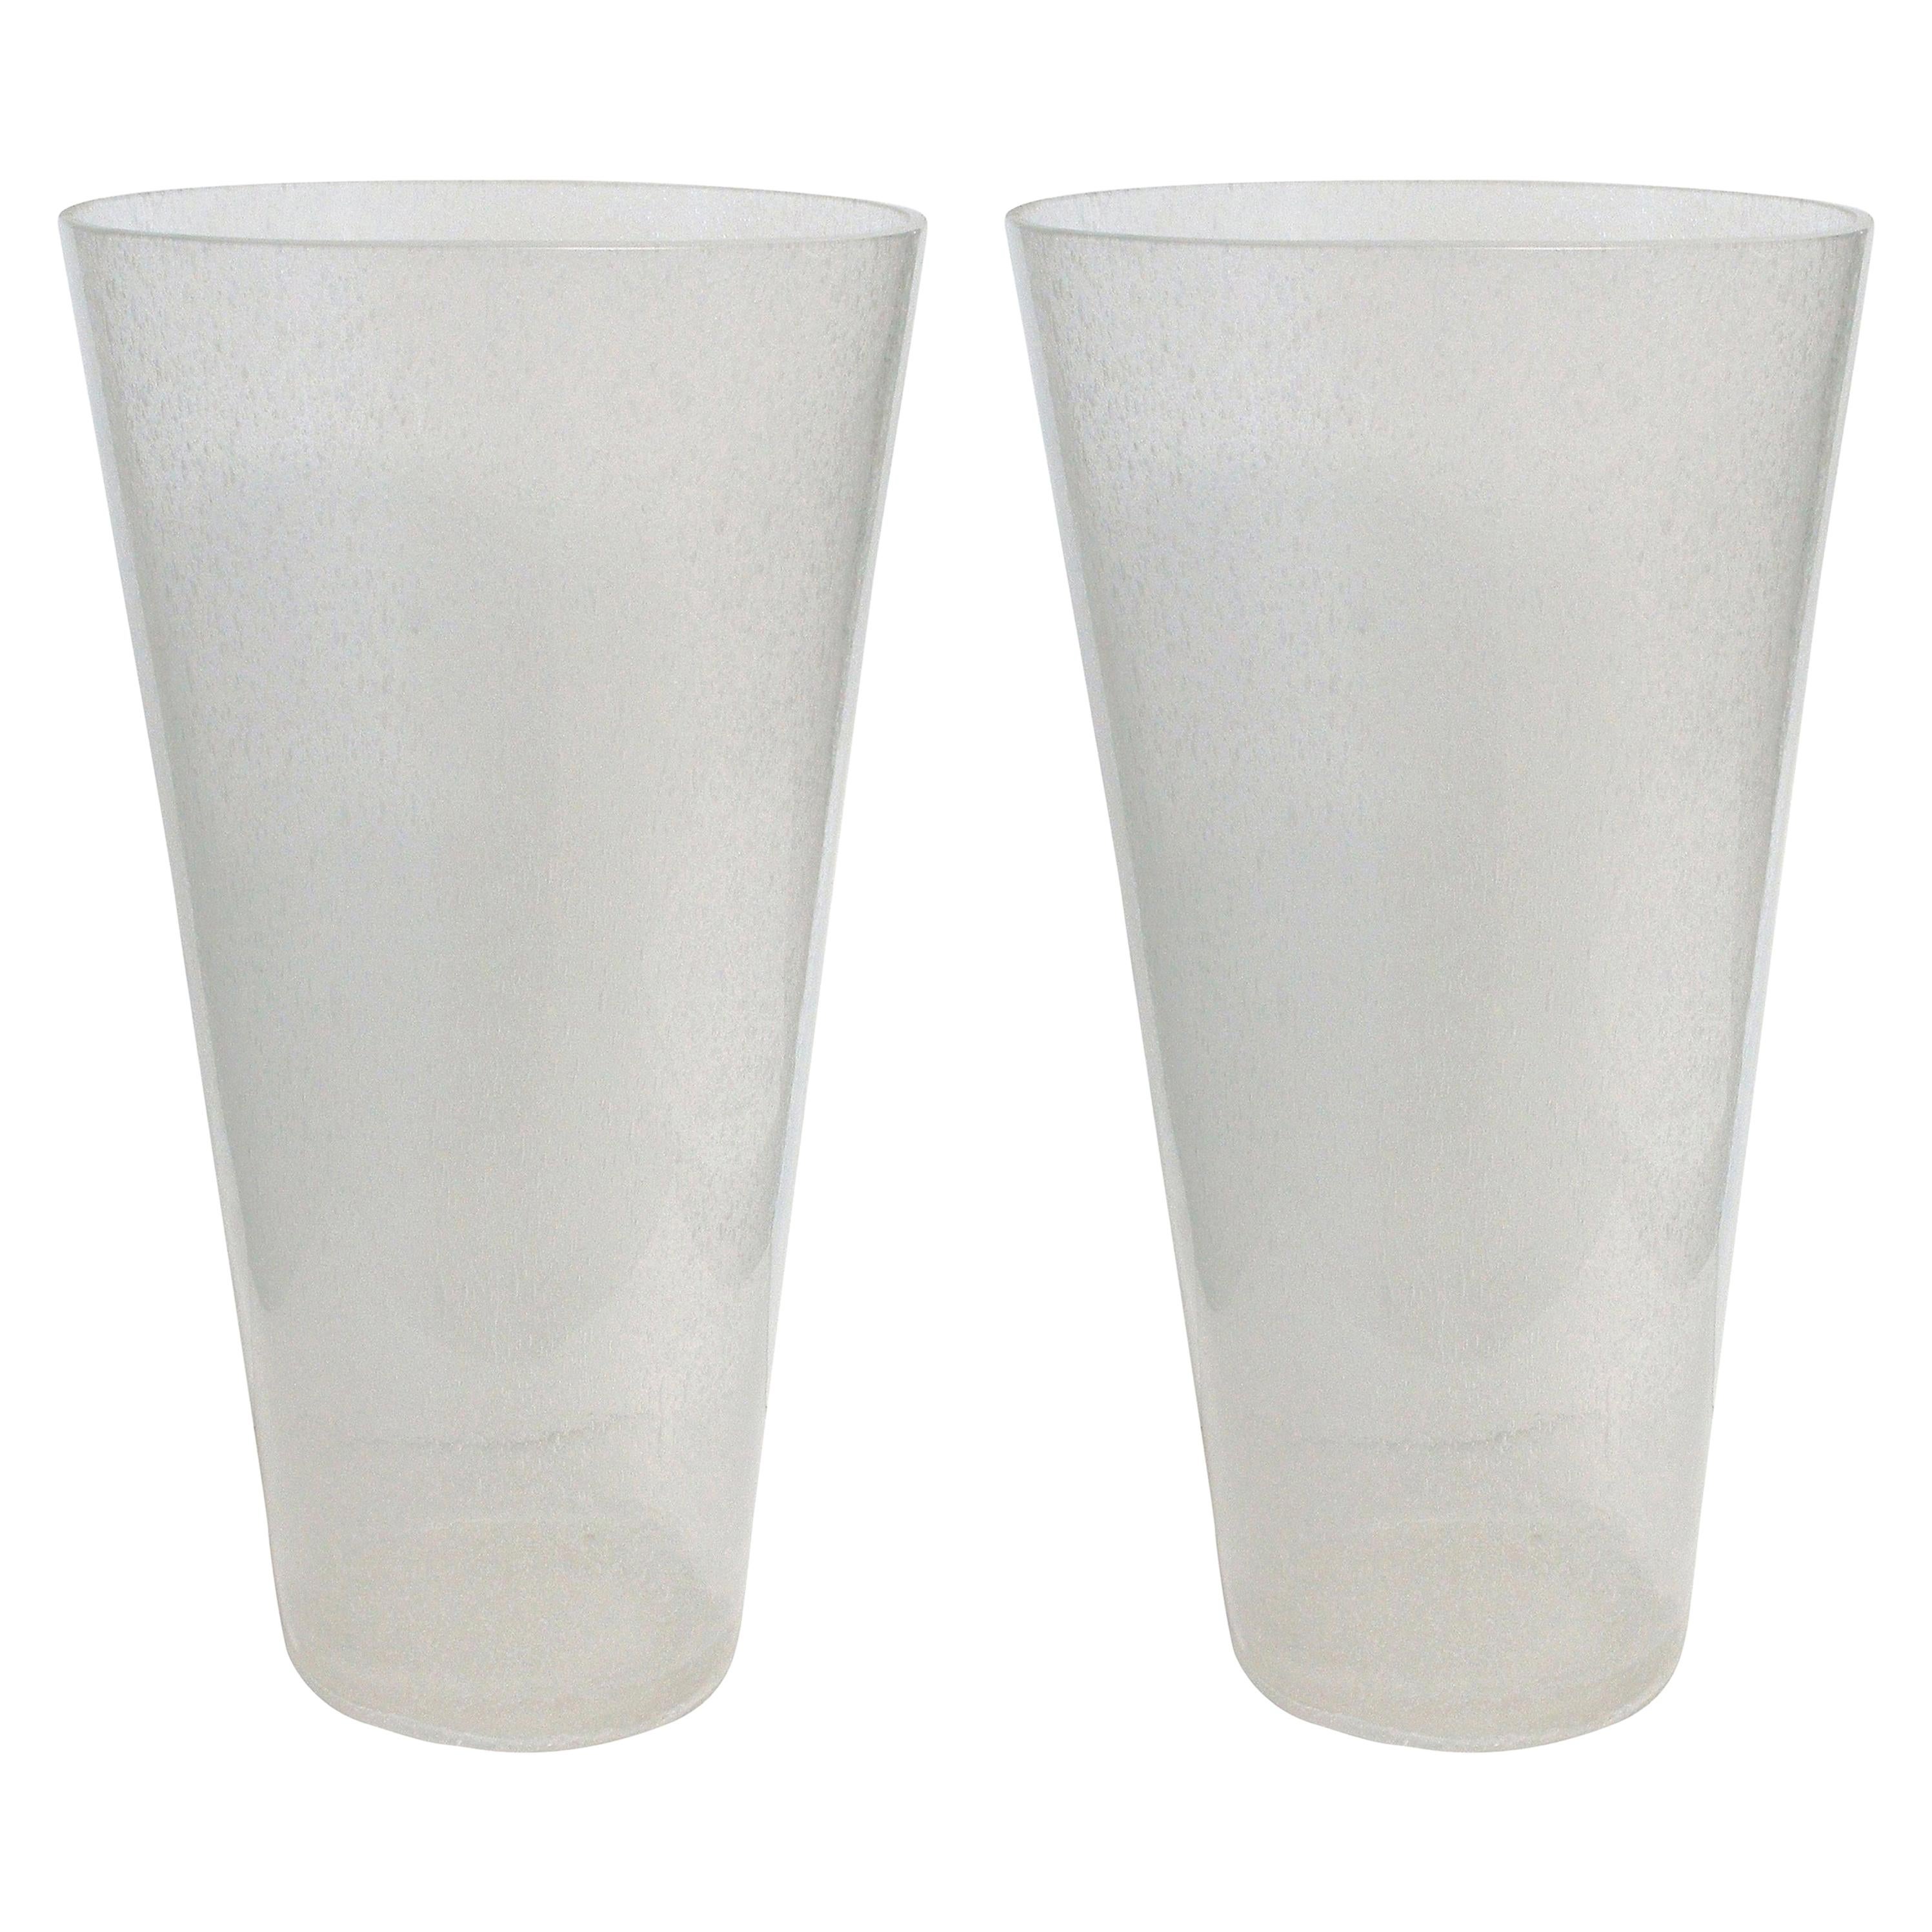 Pair of Oversized Bollicine Murano Glass Vases